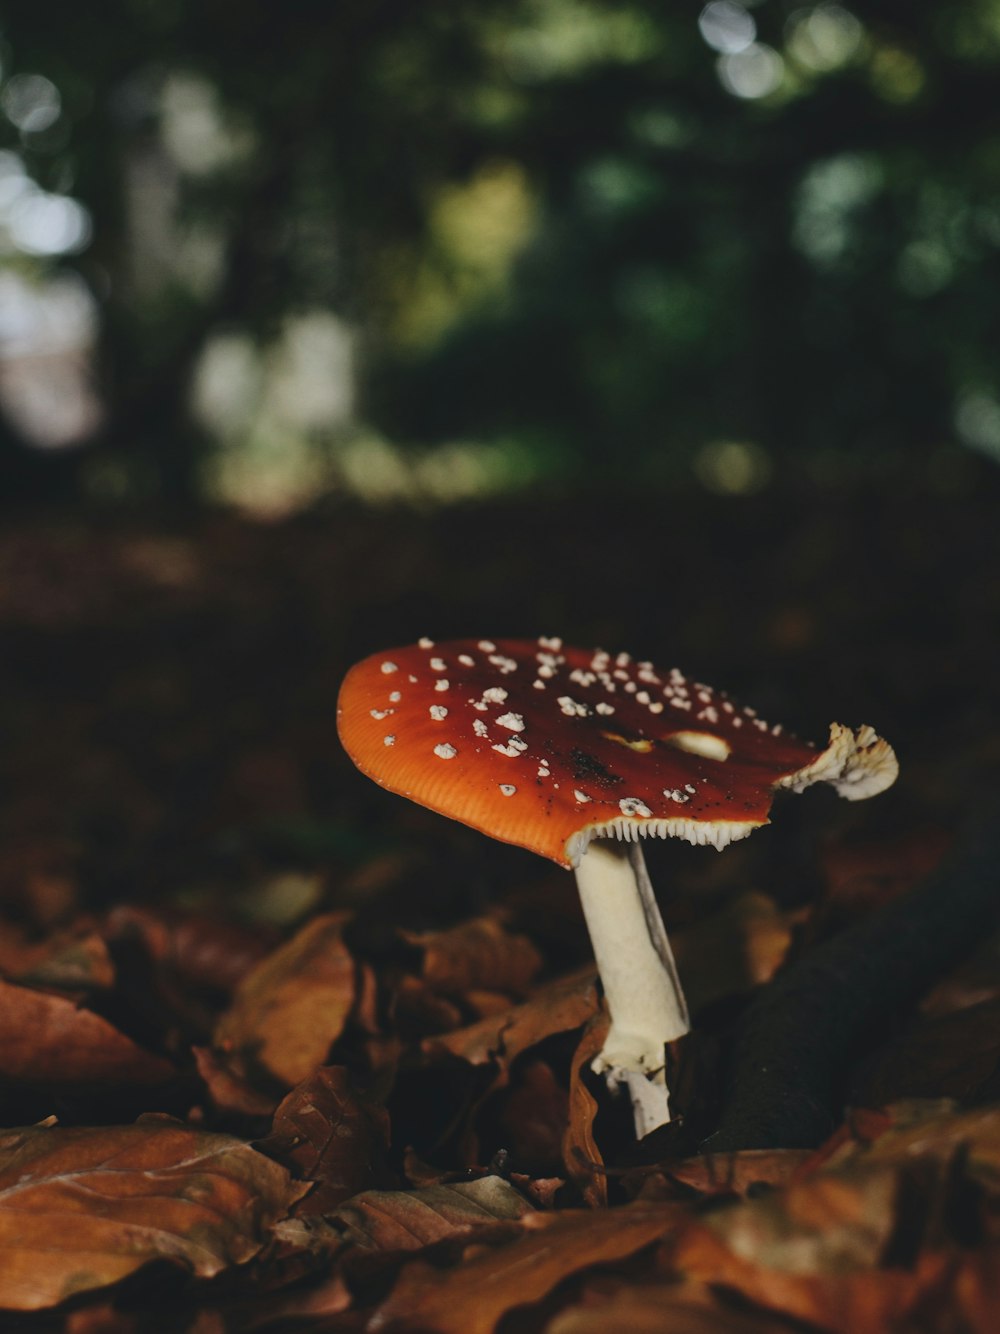 brown and white mushroom beside dried leaves